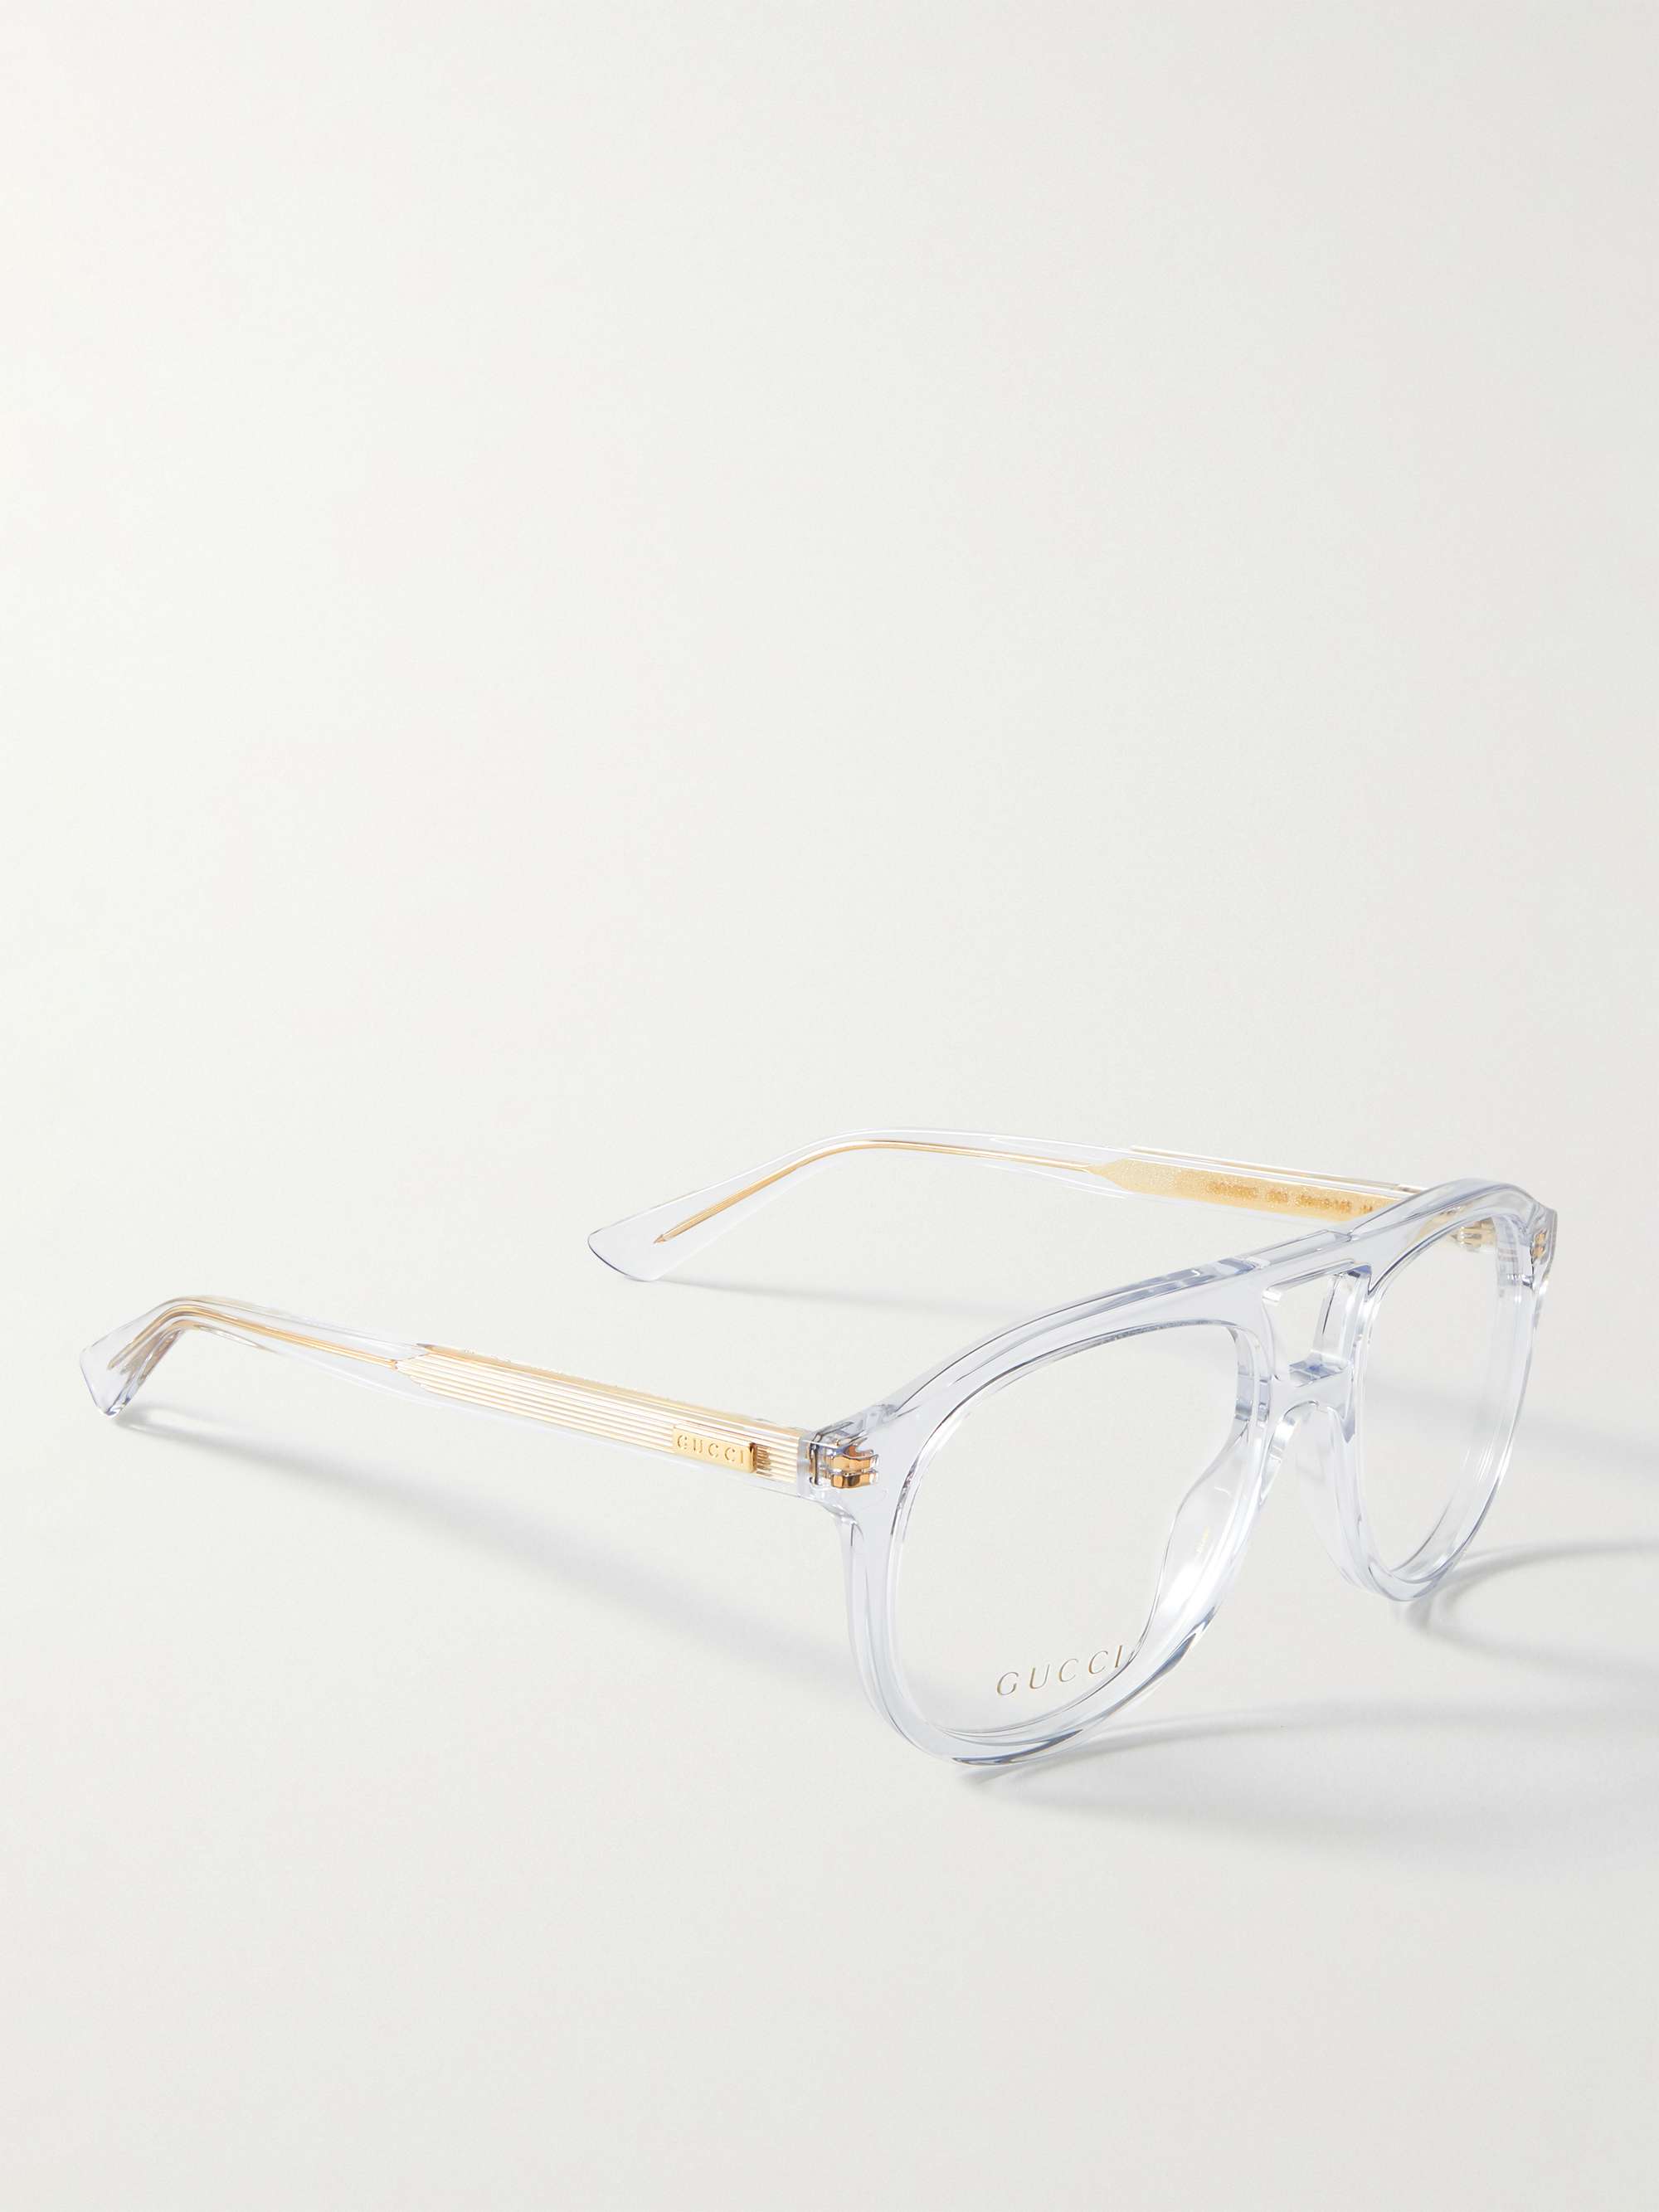 GUCCI EYEWEAR '80s Monoco Aviator-Style Acetate Optical Glasses